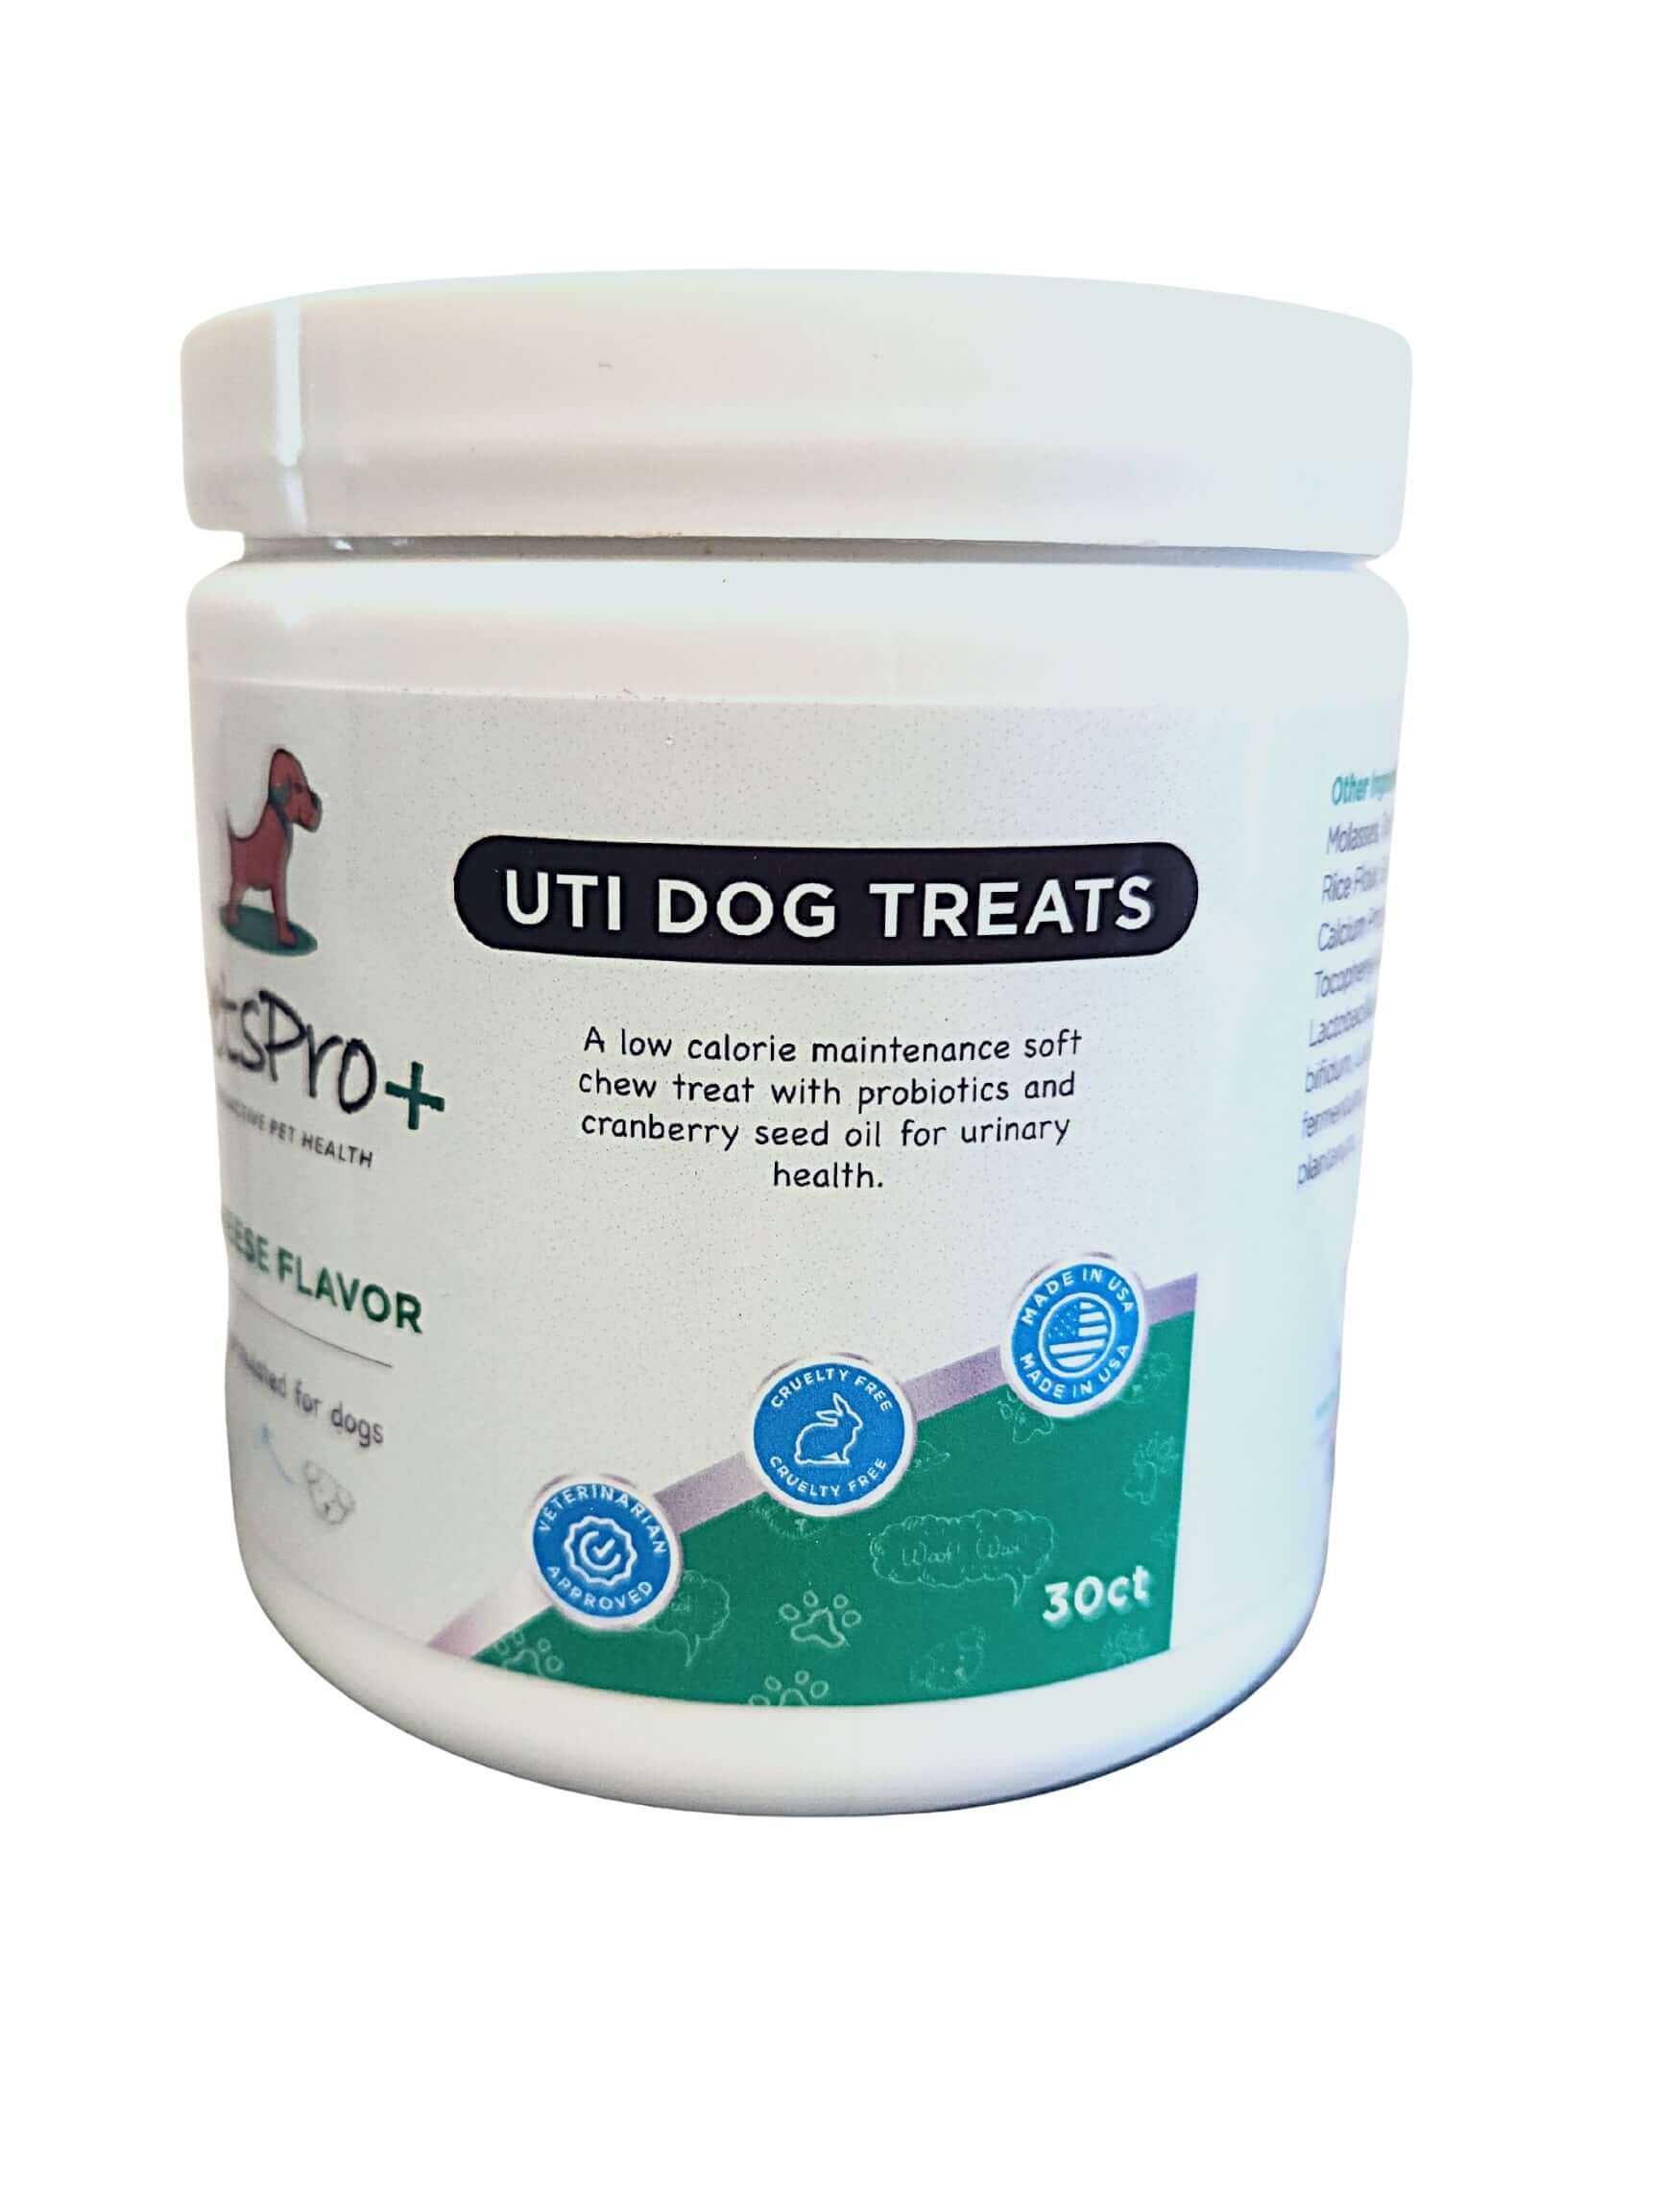 UTI Dog Treats Plastic White Jar Copy